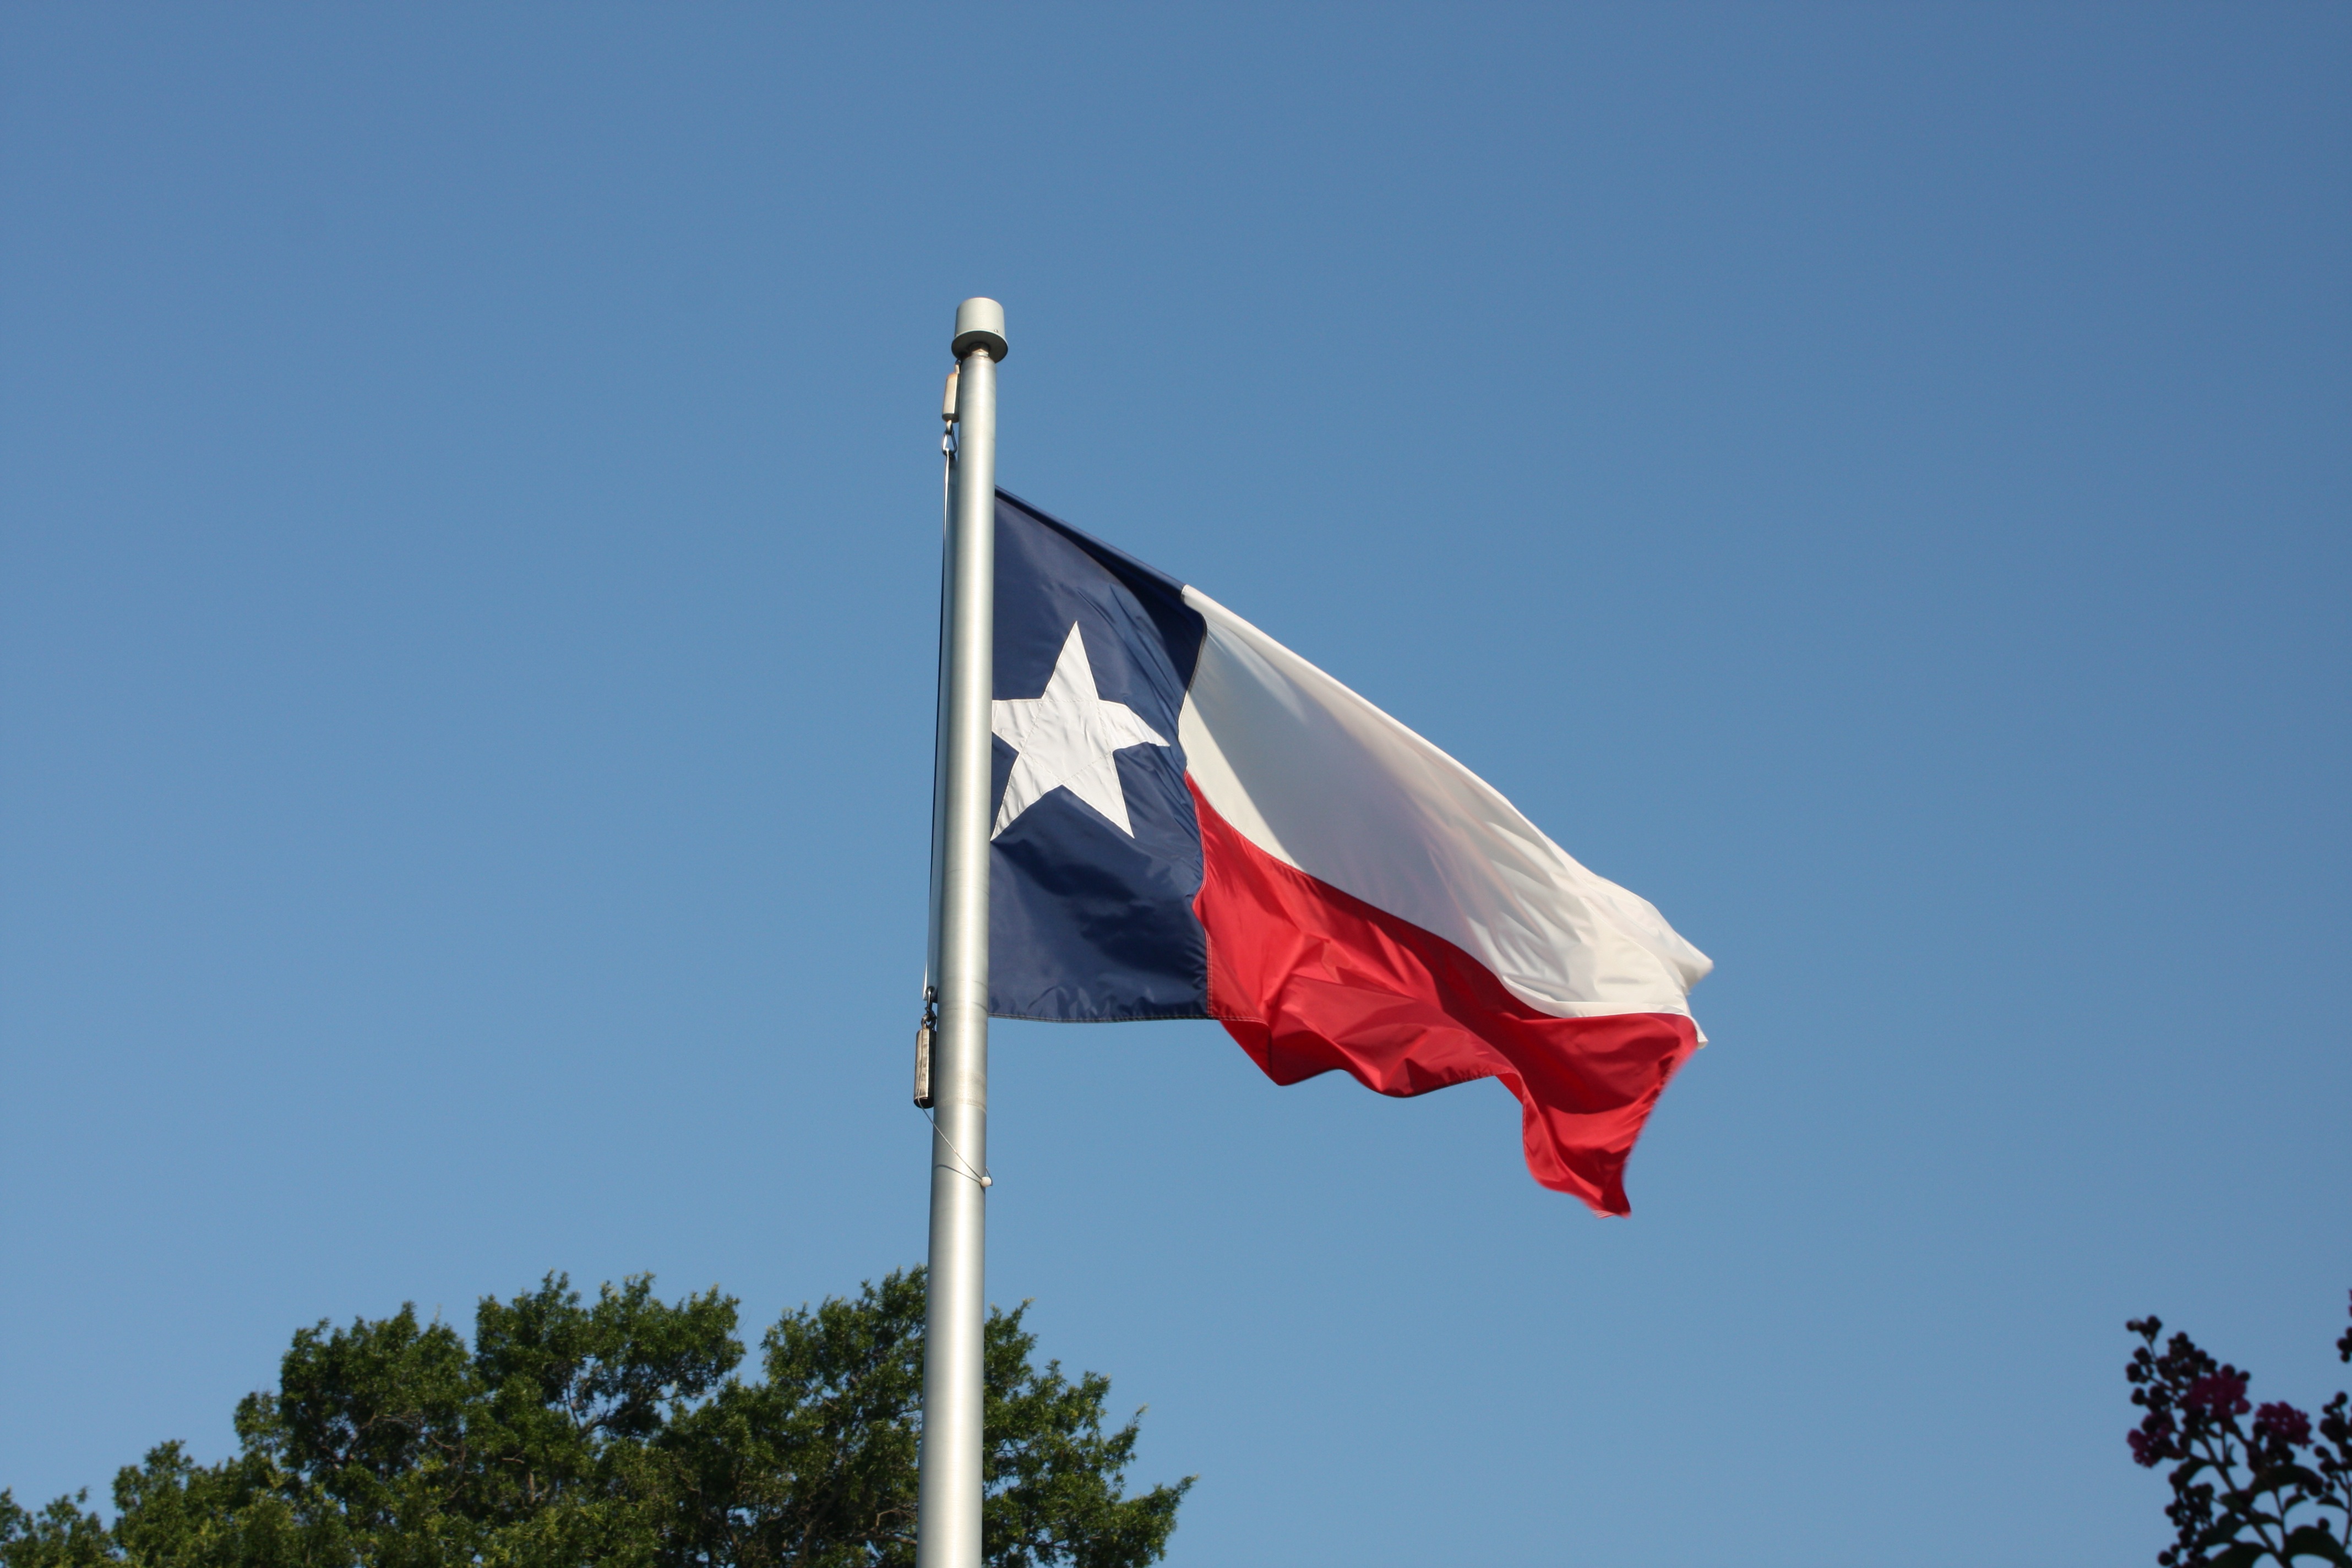 file-flag-of-texas-jpg-wikimedia-commons